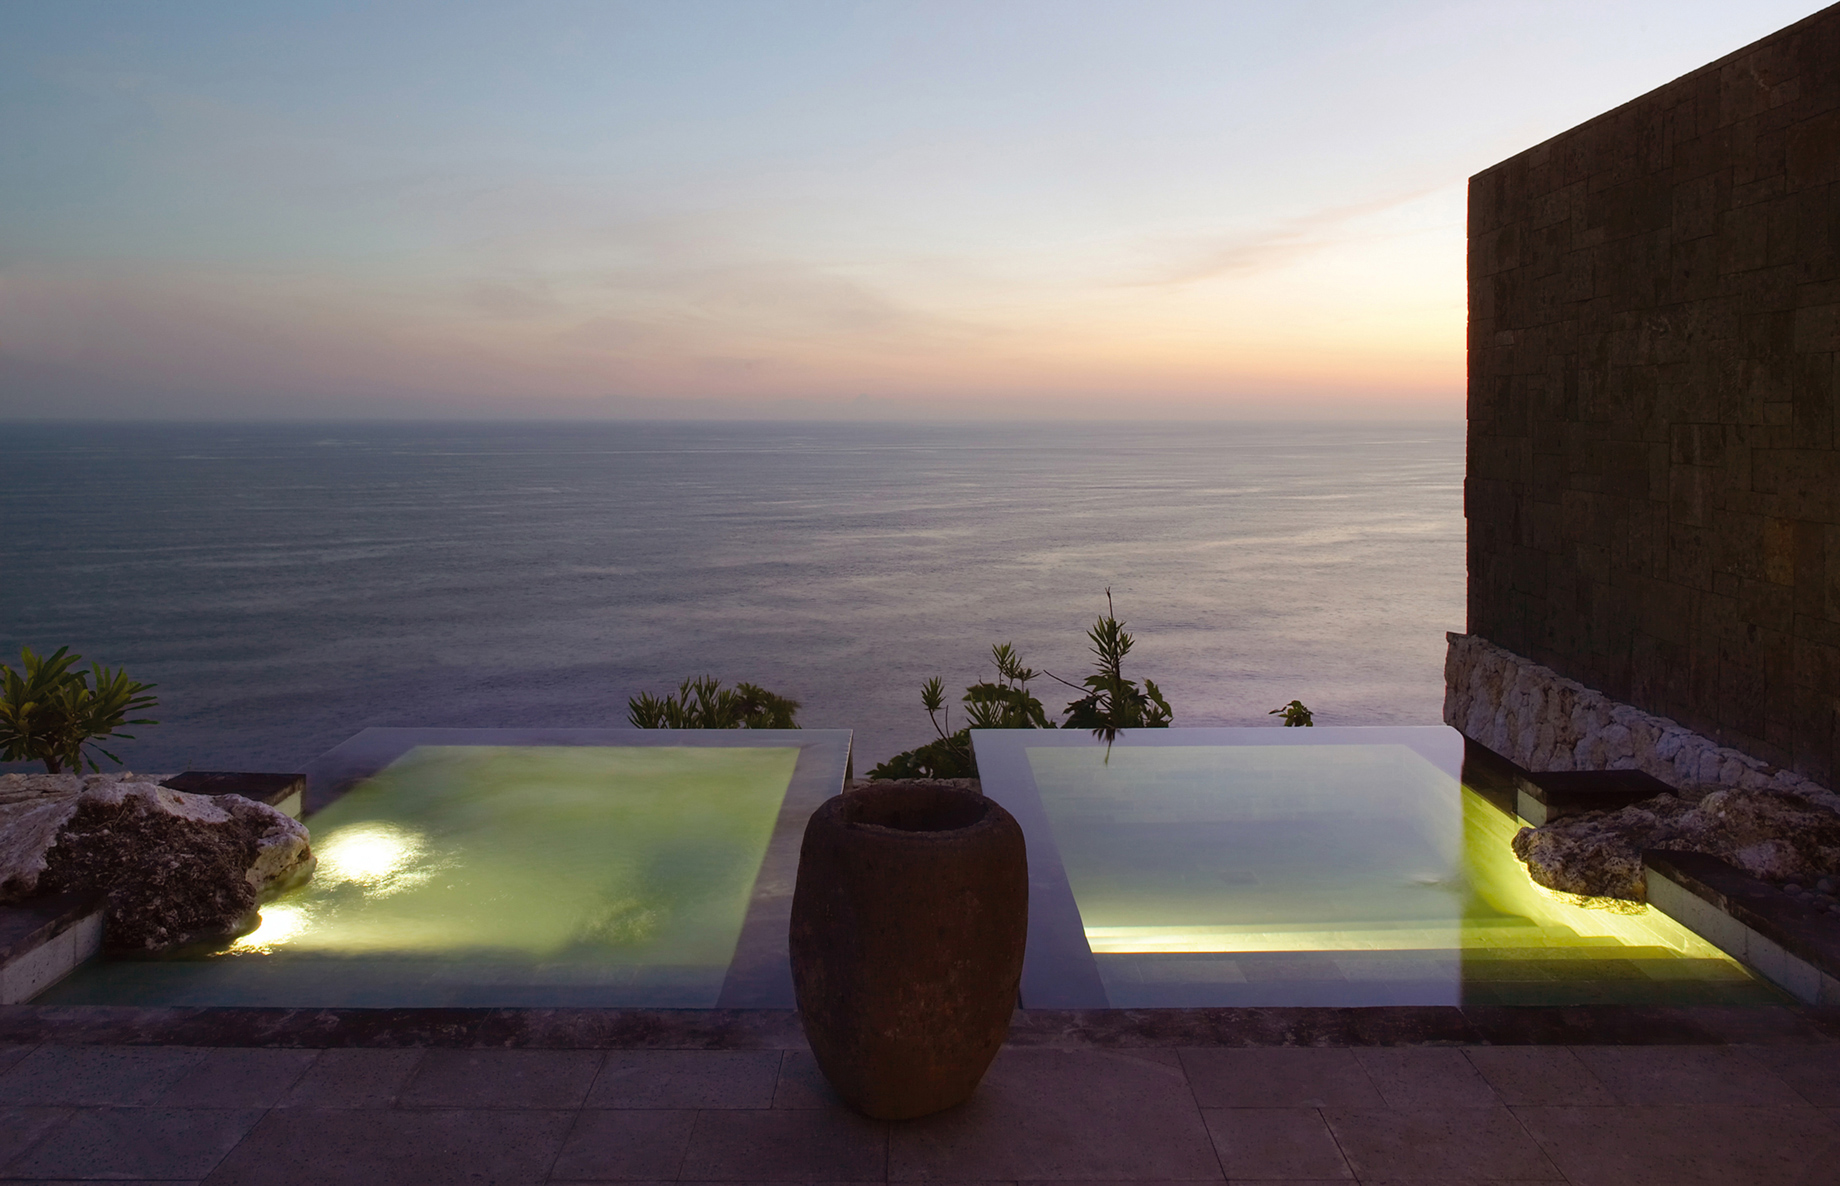 Bvlgari Resort Bali - Uluwatu, Bali, Indonesia - Hot and Cold Ocean View Cliffside Plunge Pools Sunset